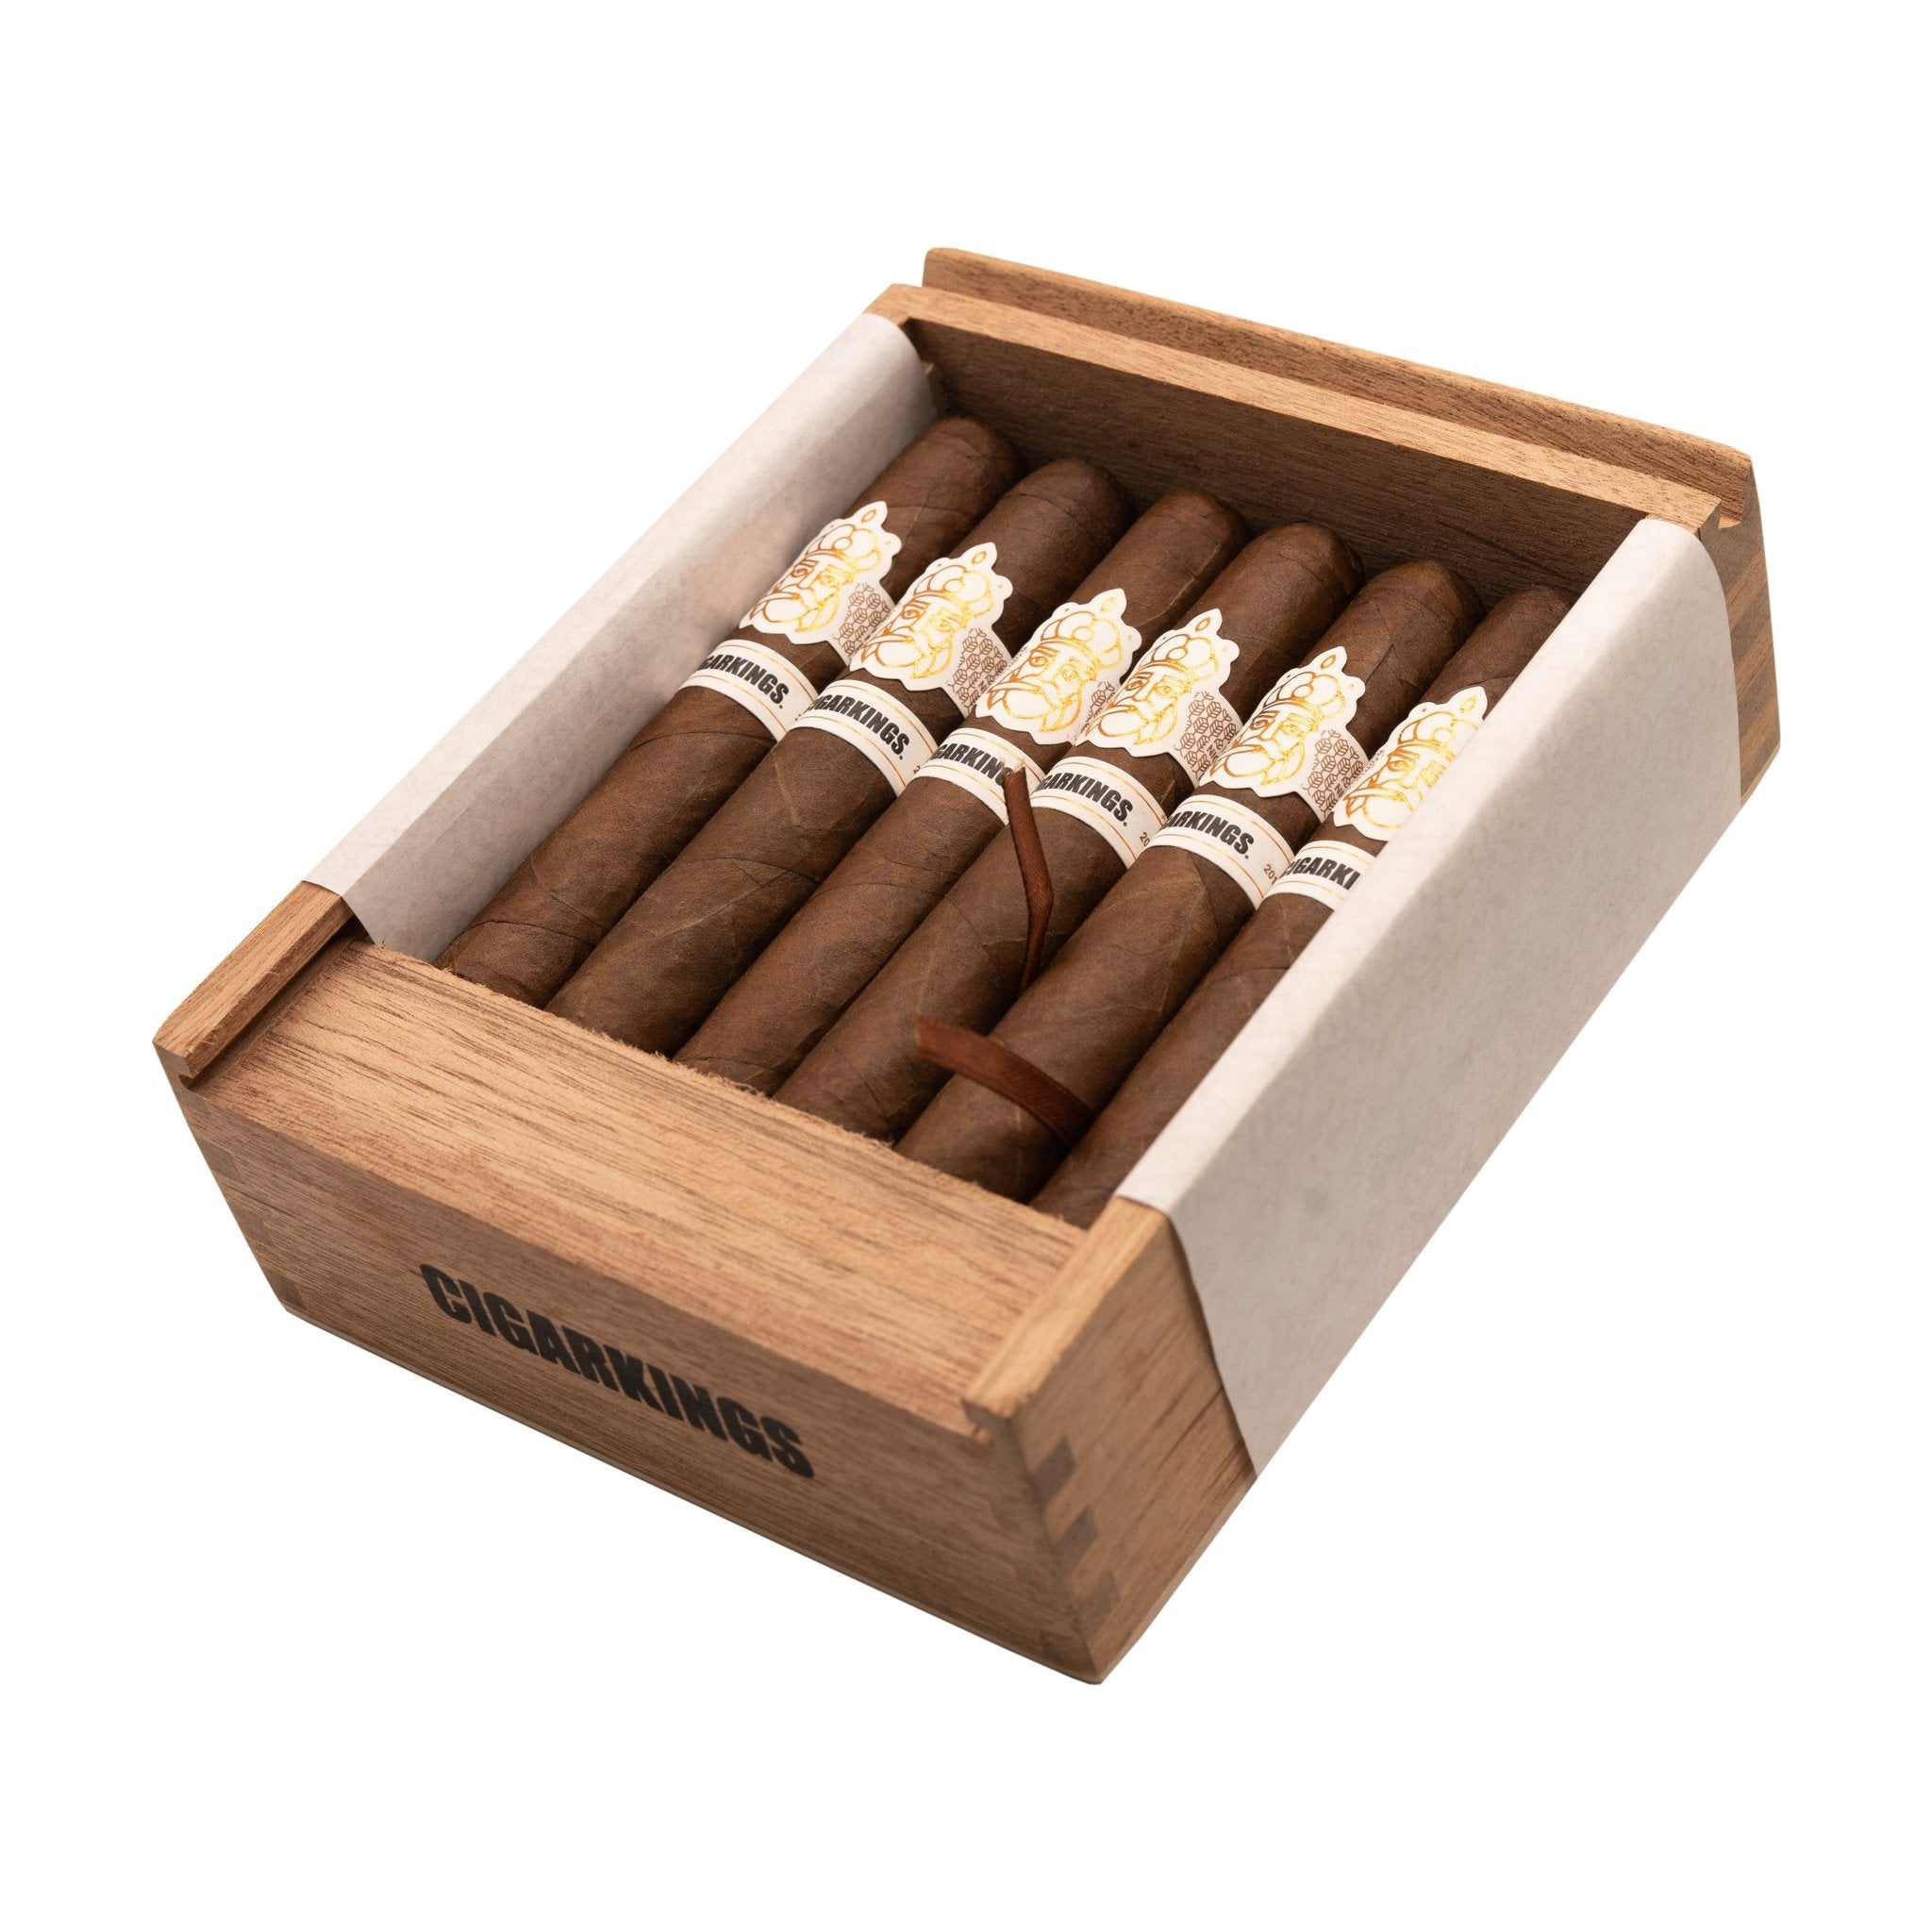 Robusto Maduro - CigarKings GmbH